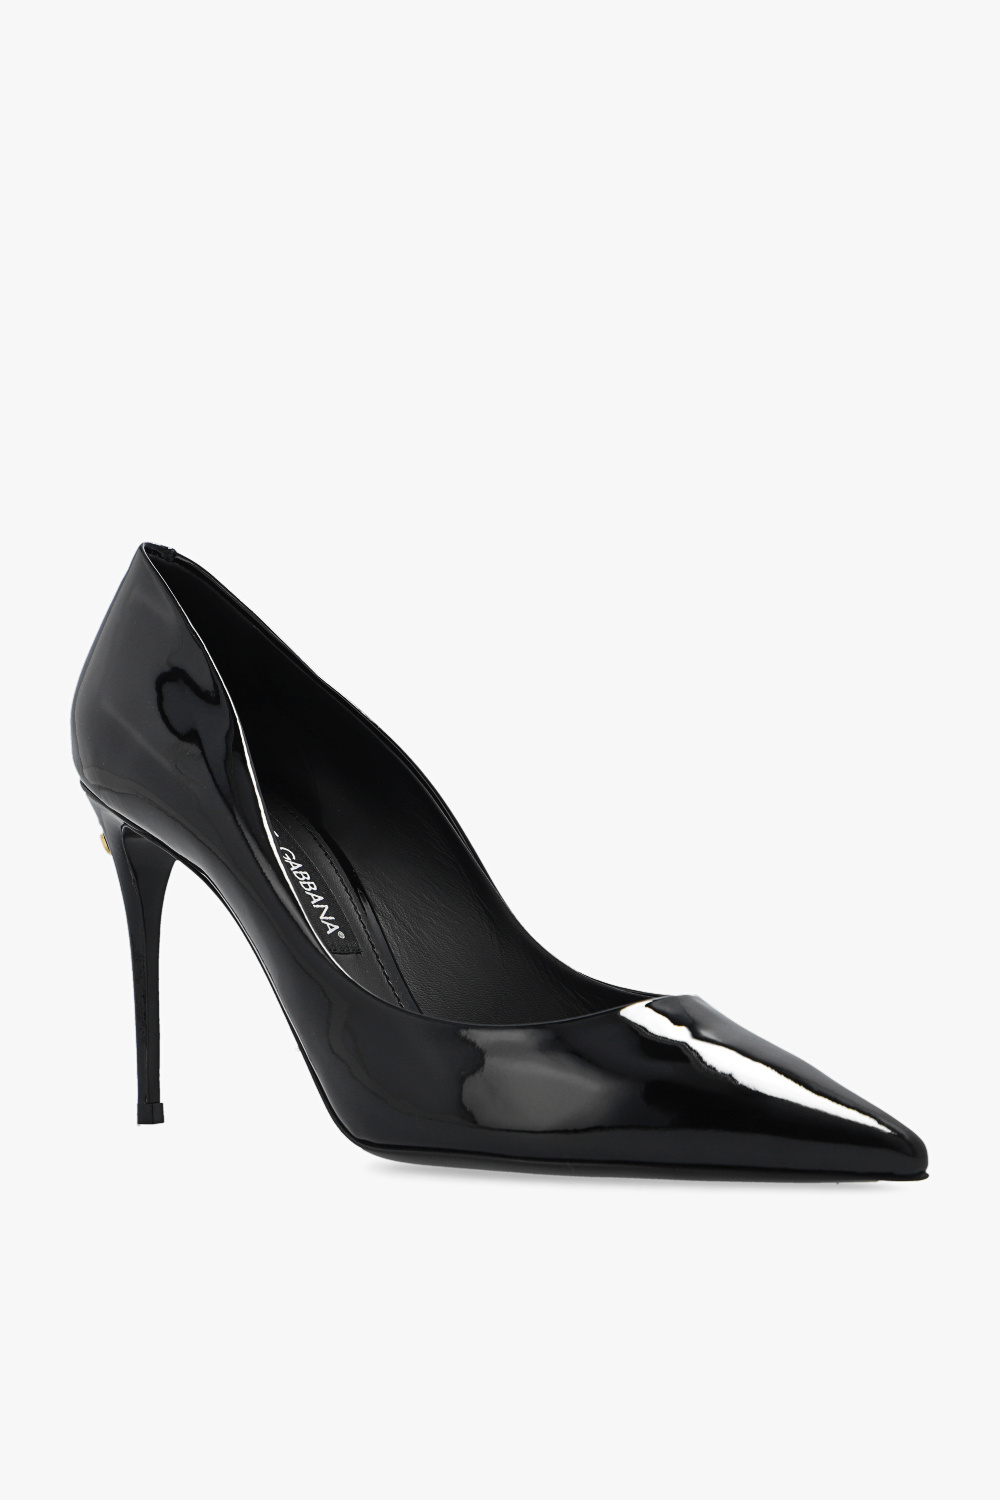 Dolce & Gabbana ‘Cardinale’ patent leather pumps